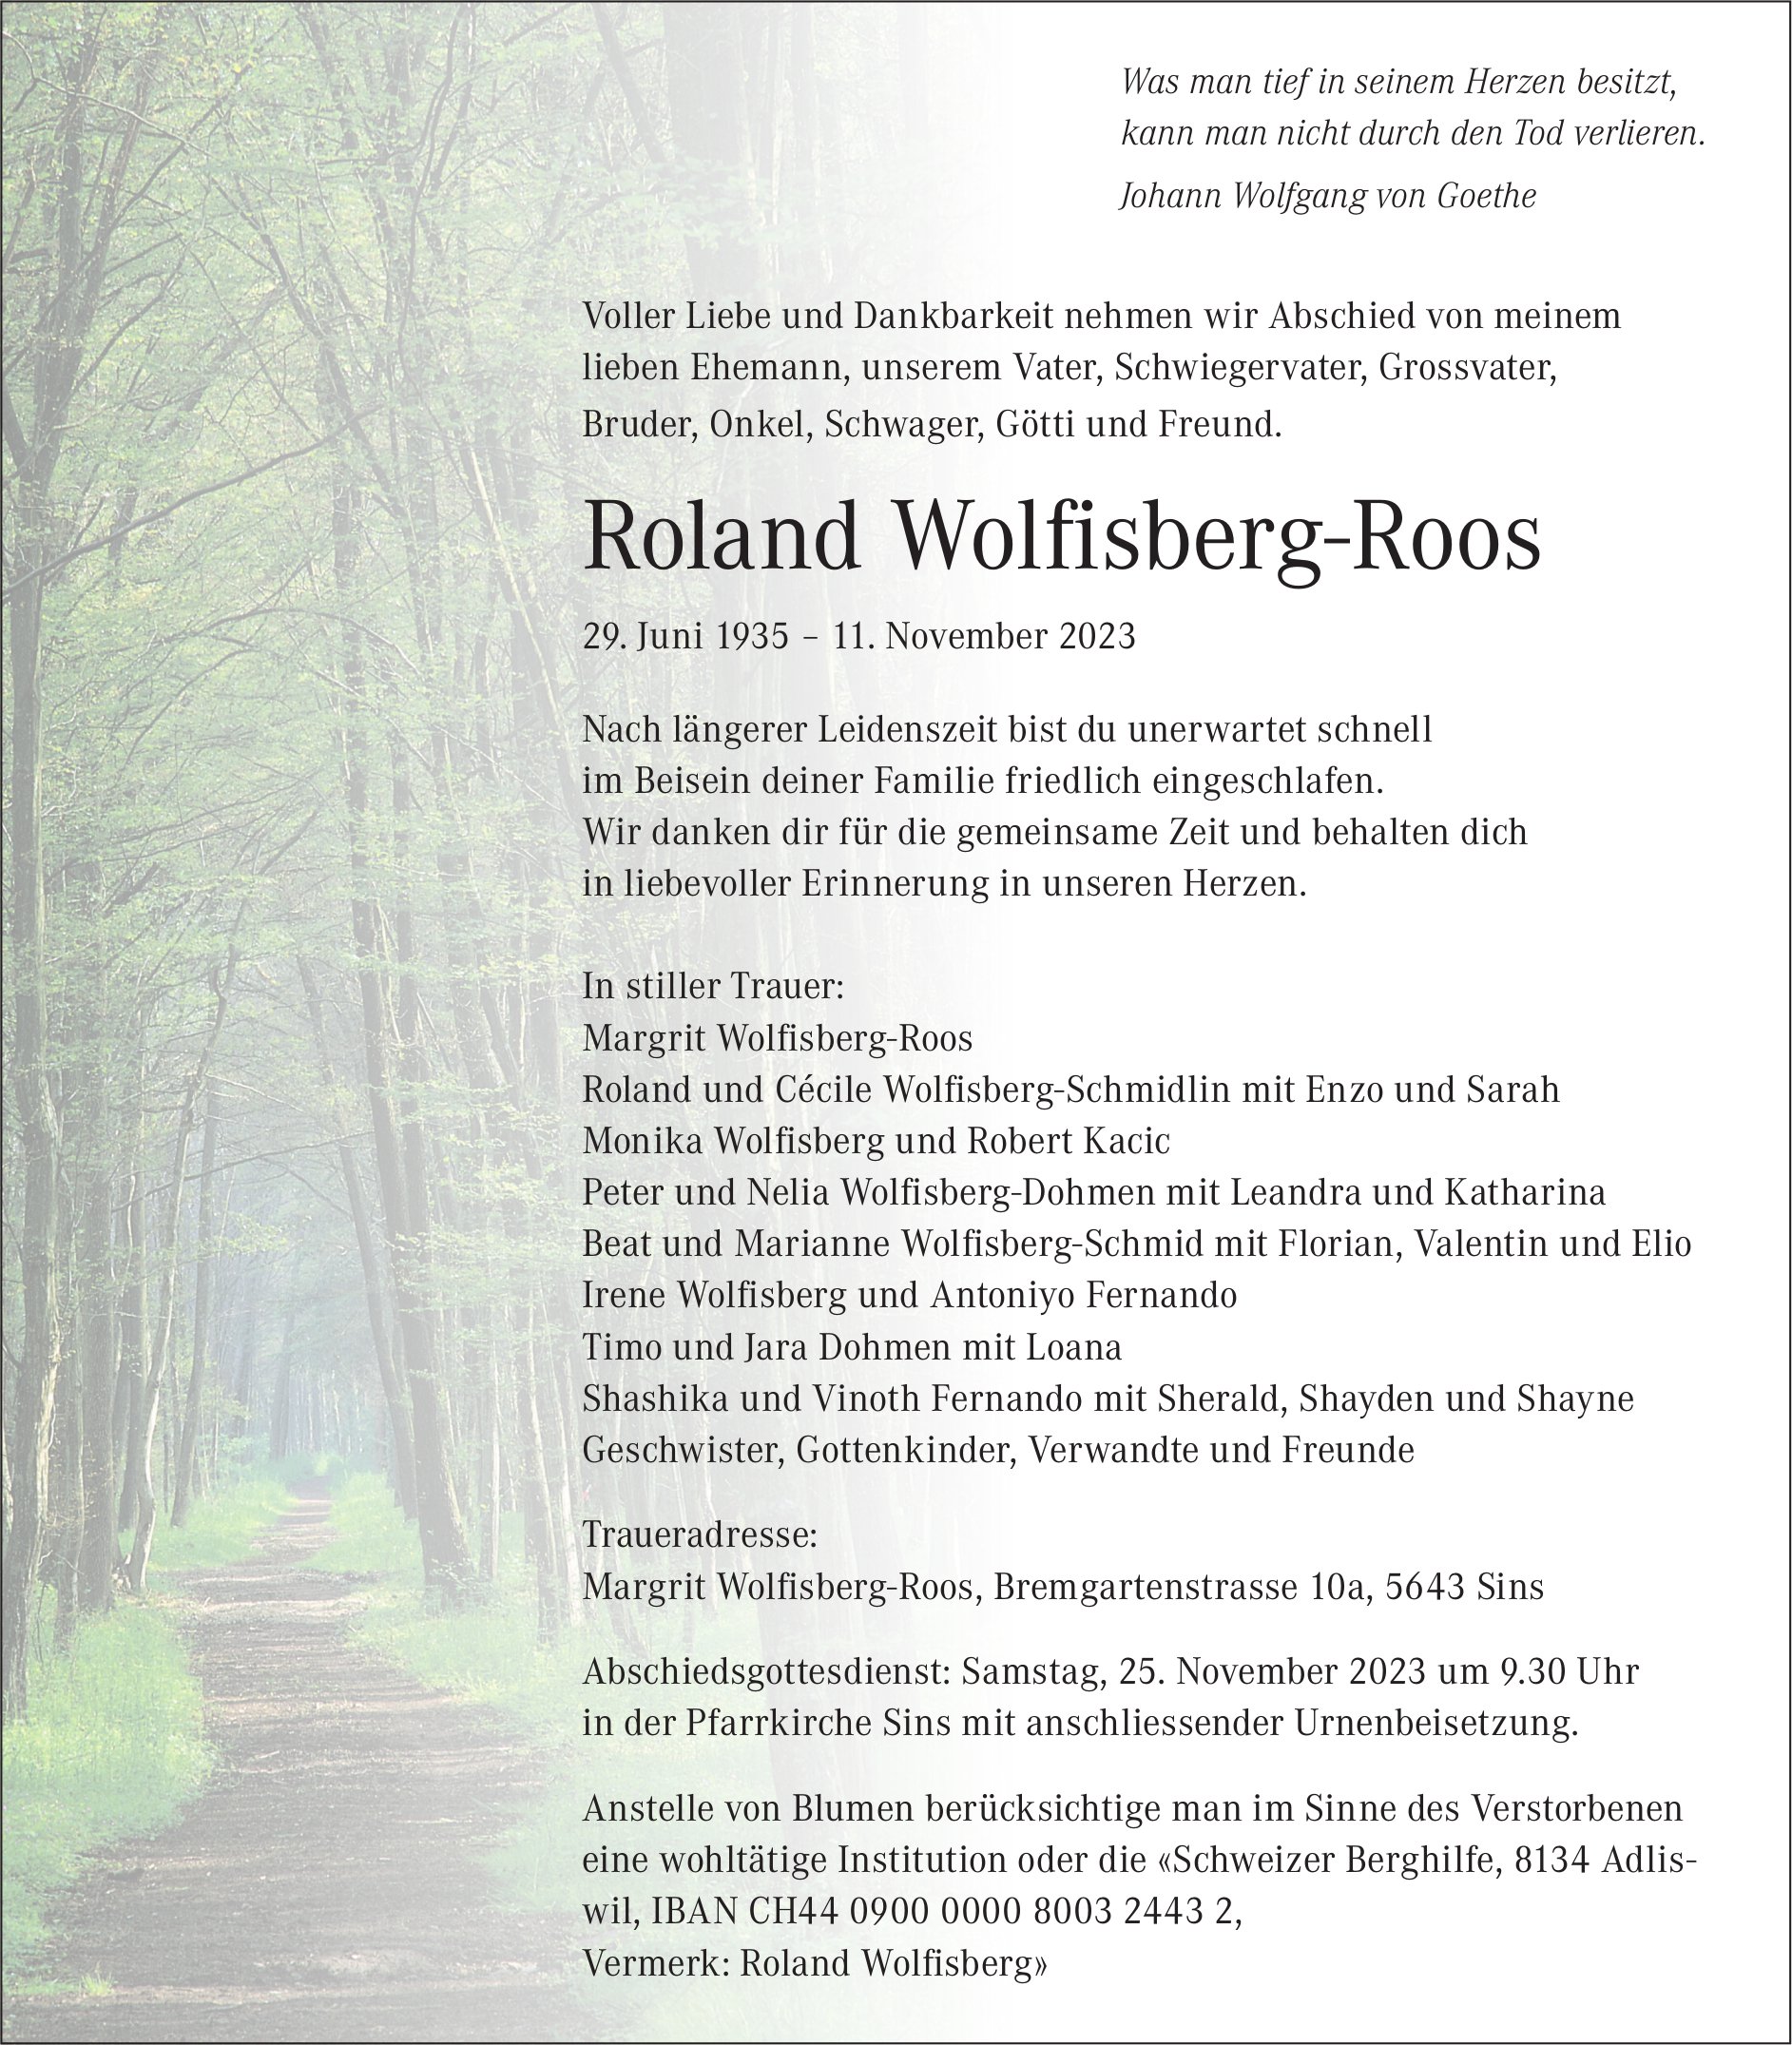 Wolfisberg-Roos Roland, November 2023 / TA